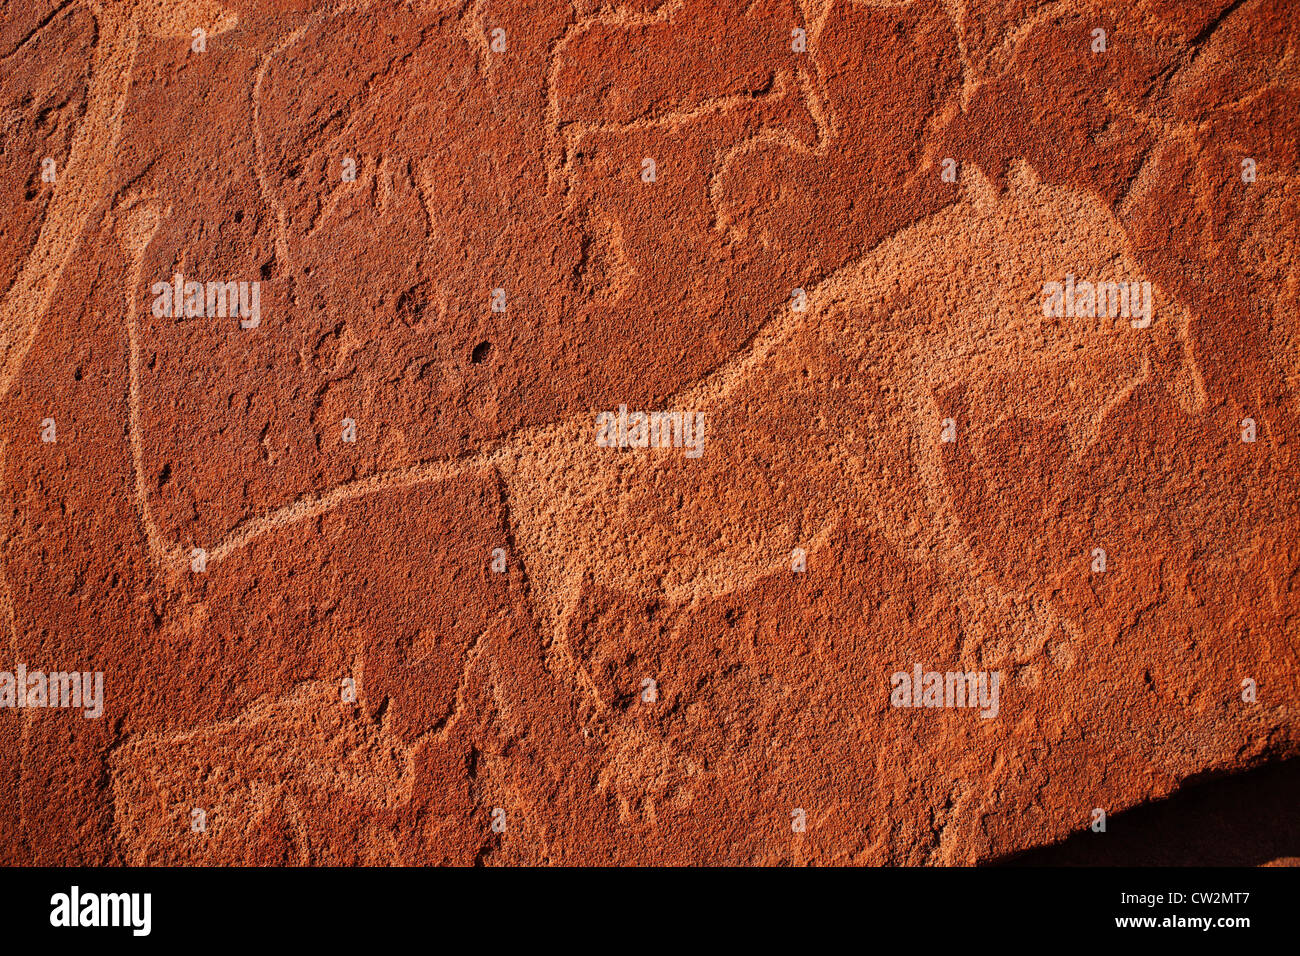 Twyfelfontein petroglyphs/ rock engravings of a Lion. Namibia Stock Photo